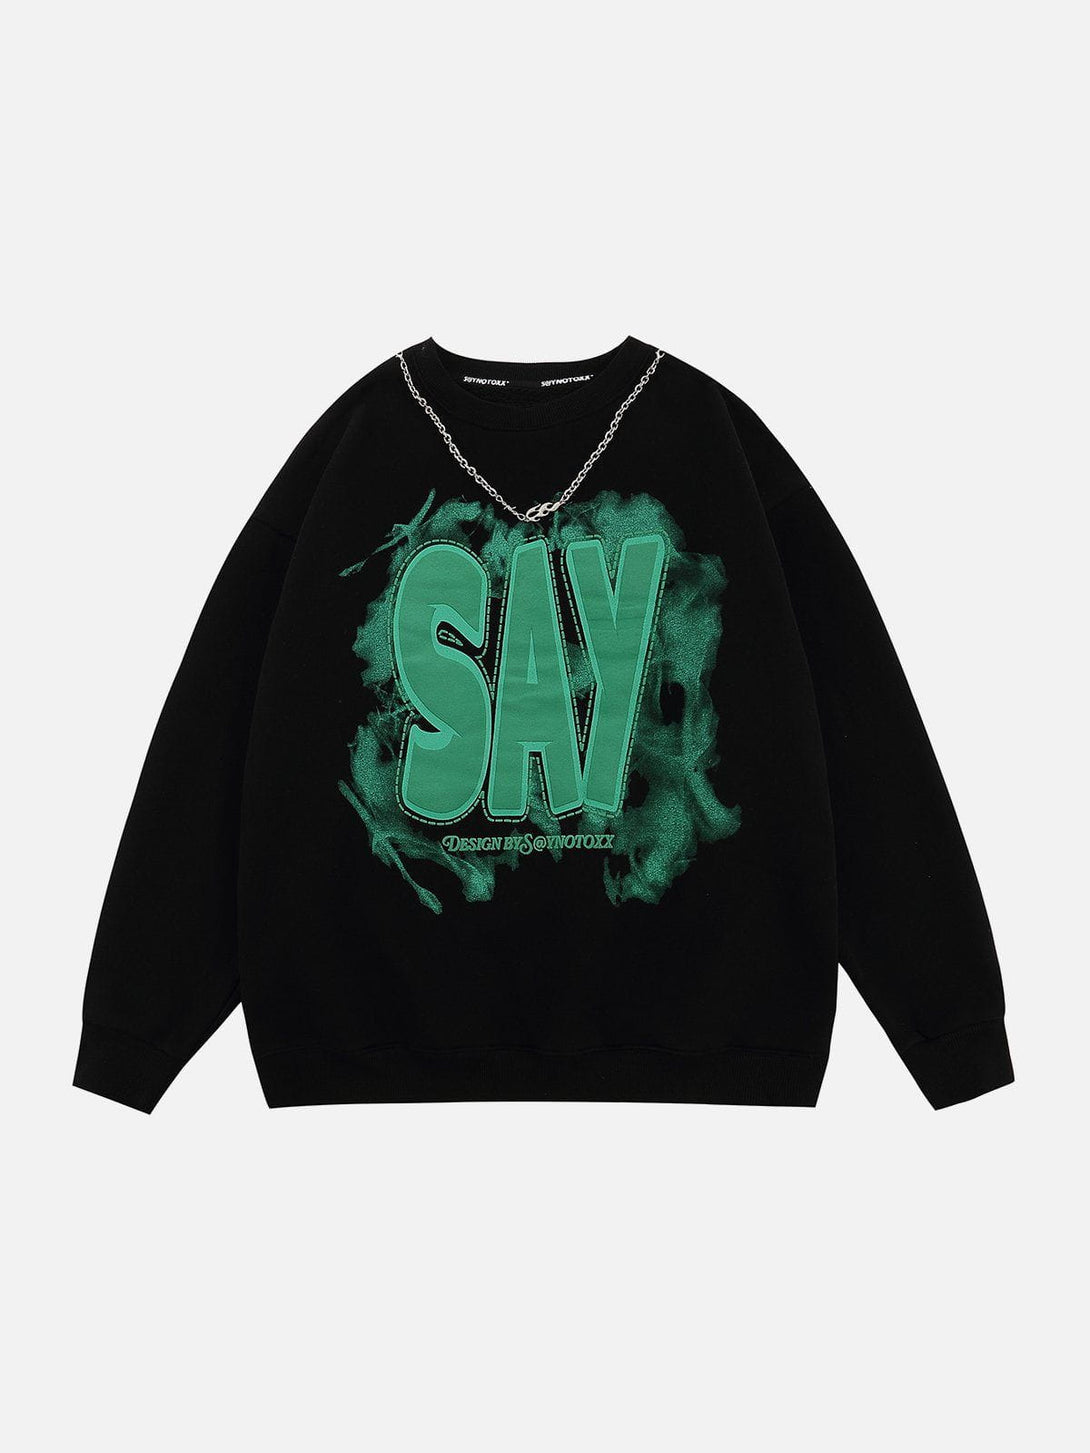 Levefly - SAY Print Chain Sweatshirt - Streetwear Fashion - levefly.com